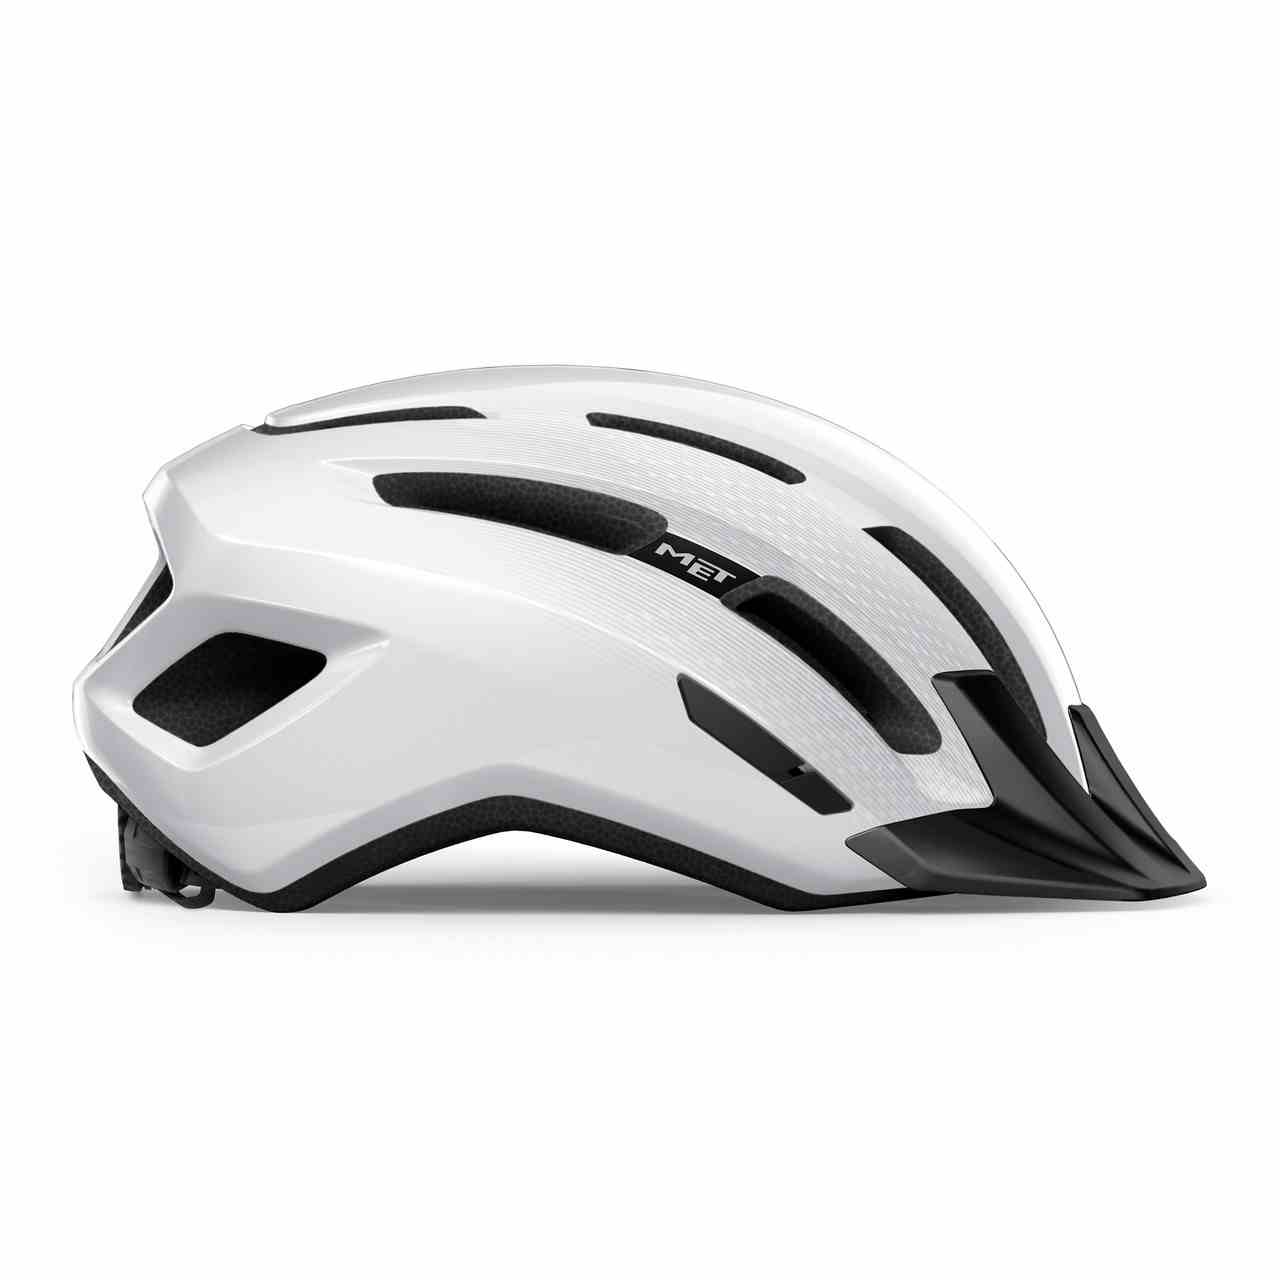 Downtown Helmet White/Glossy